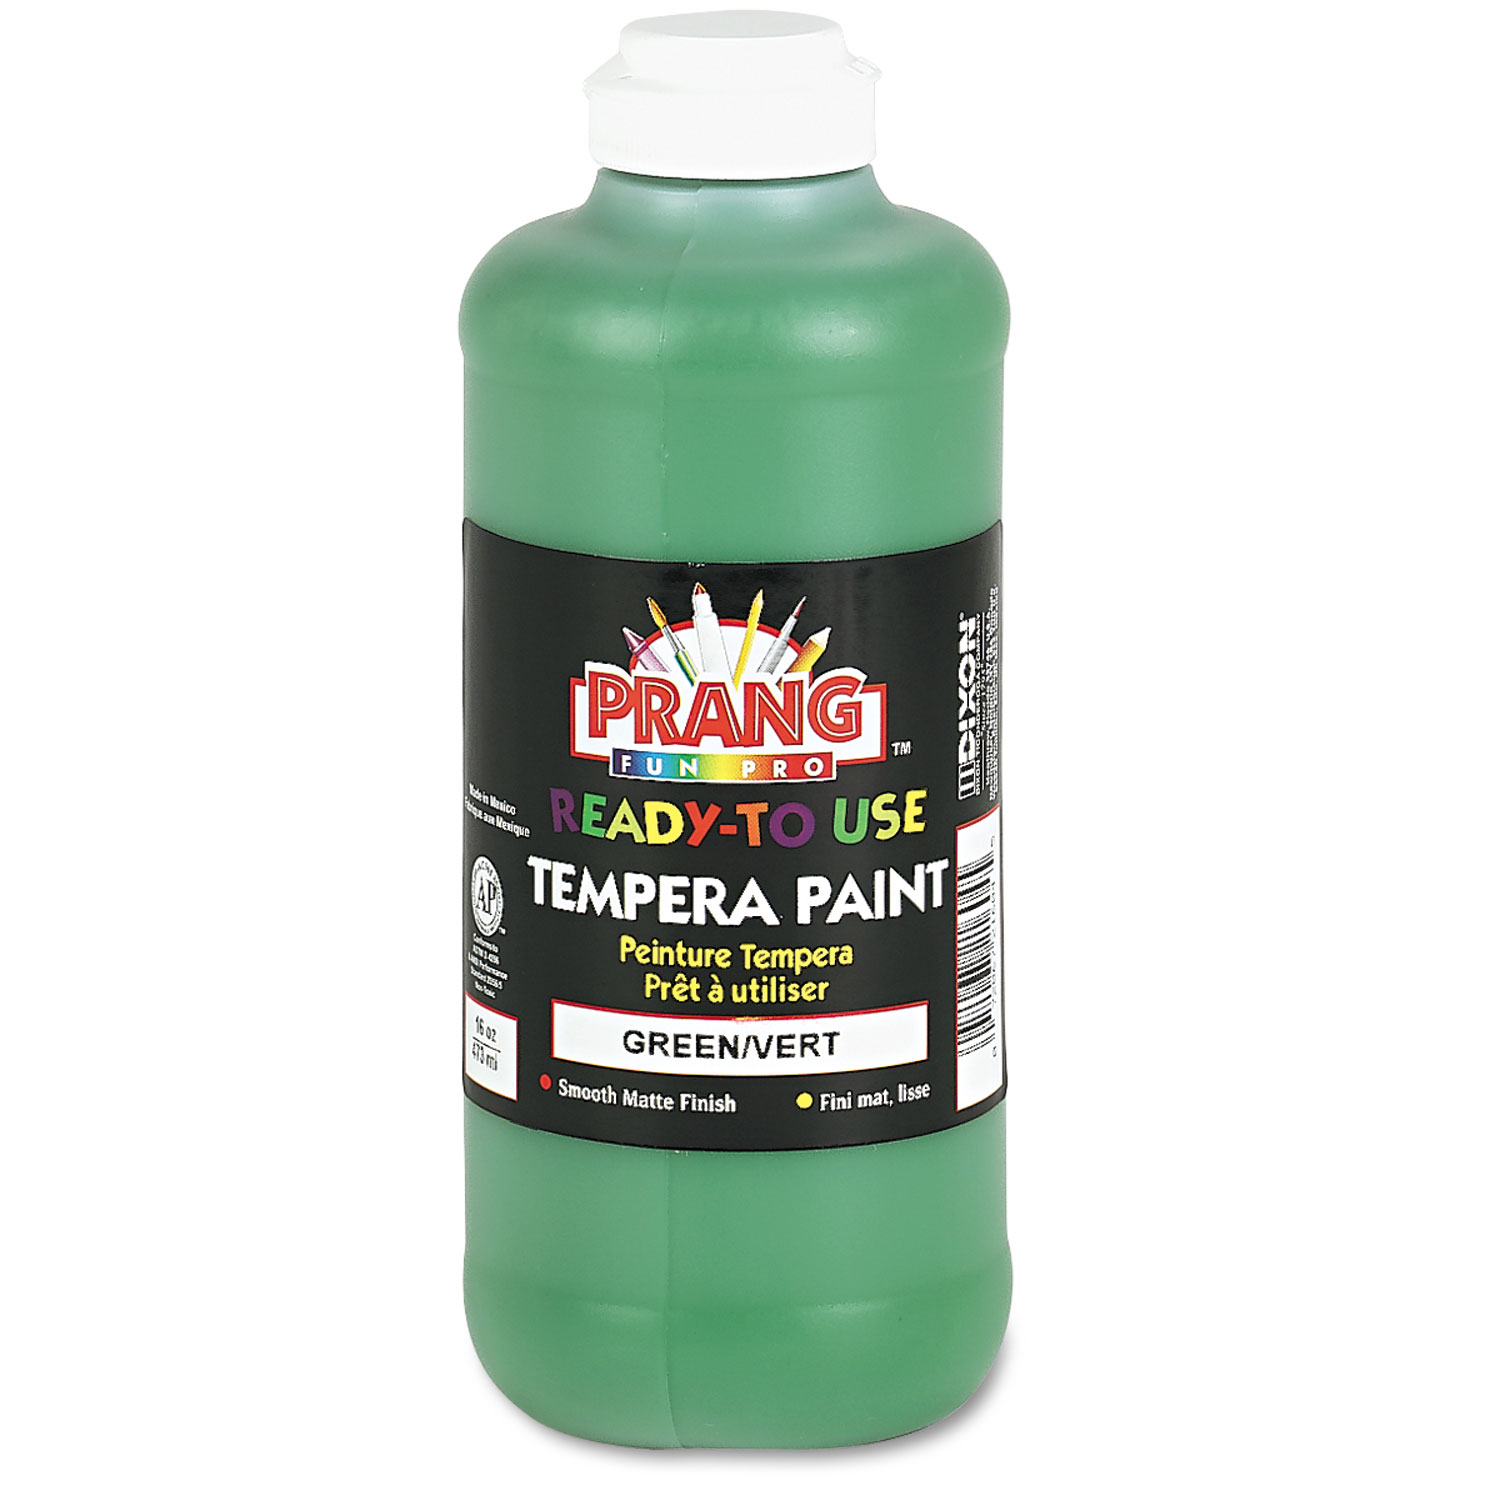 Prang® Ready-to-Use Tempera Paint, Green, 16 oz